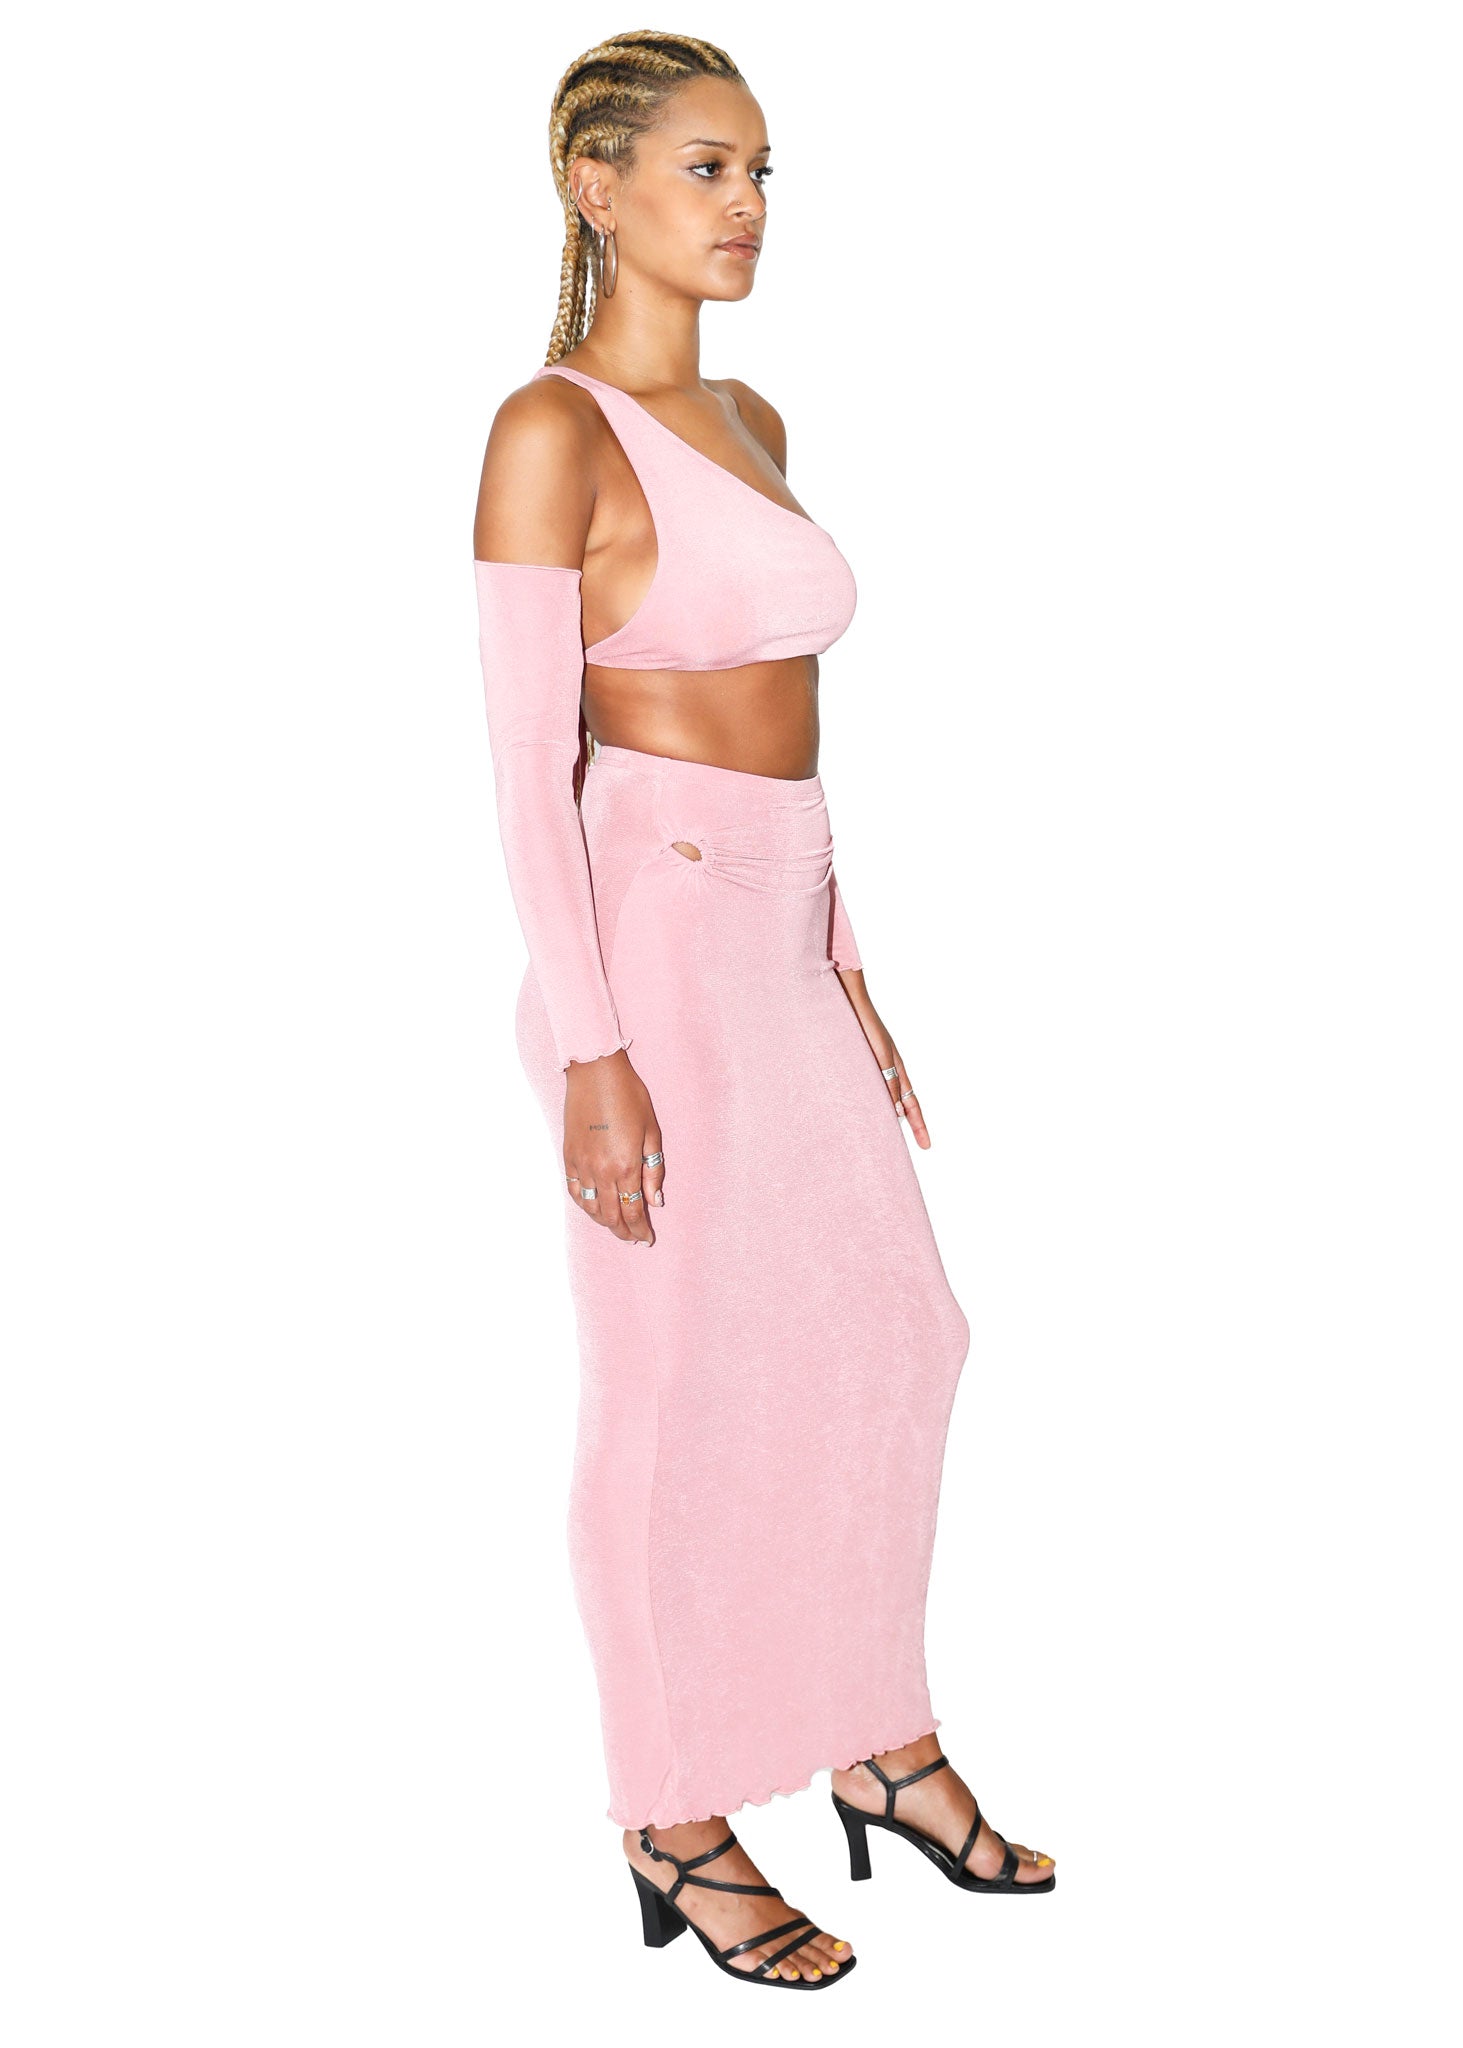 Tyrell Brand Bikini Set- Pink